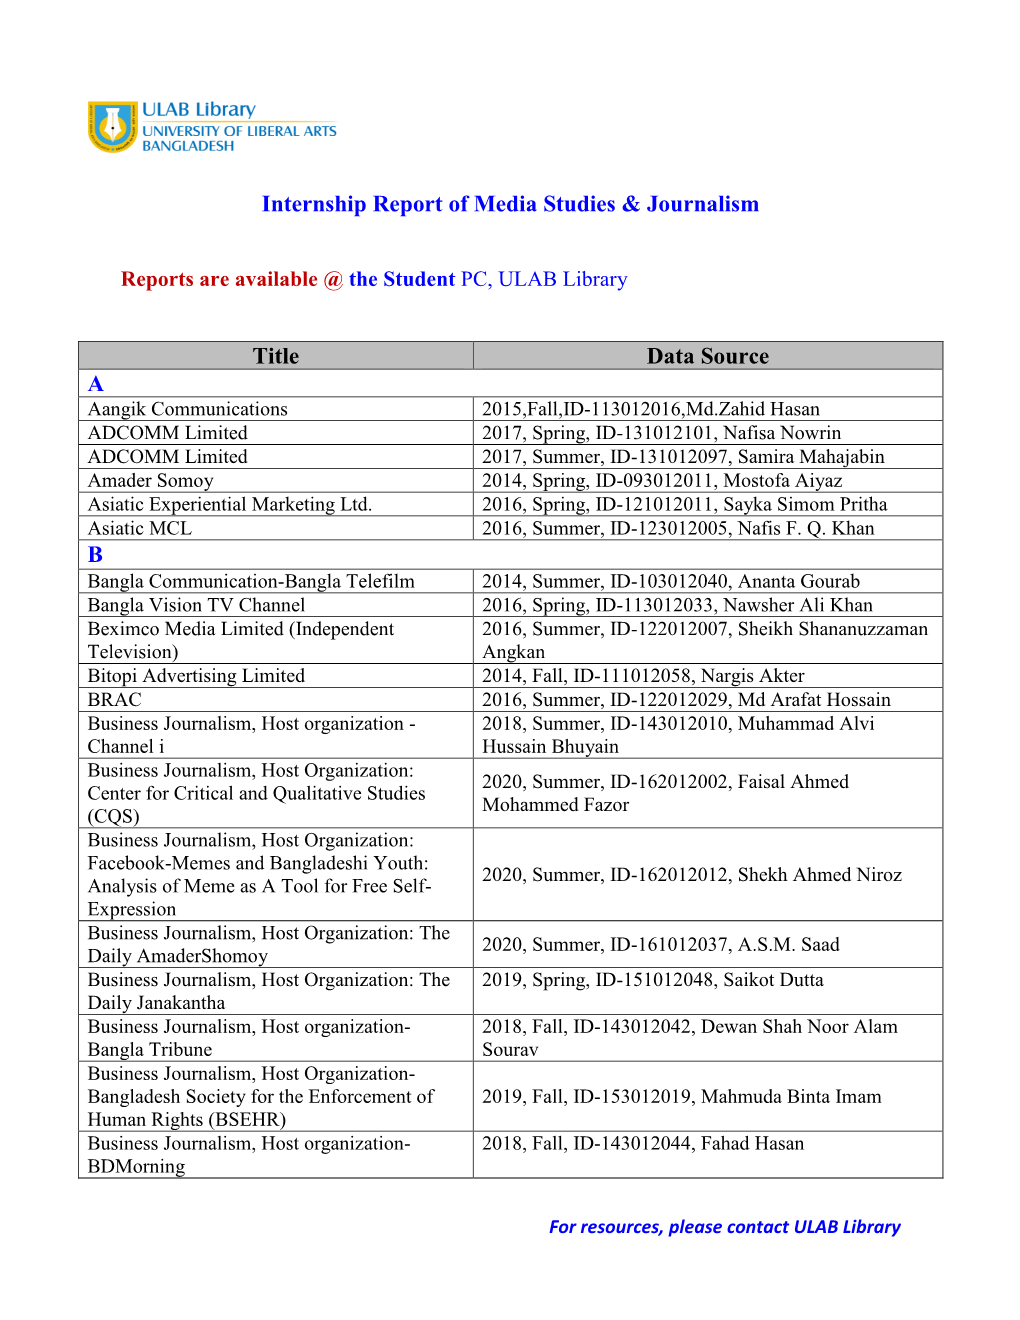 Internship Report of Media Studies & Journalism Title